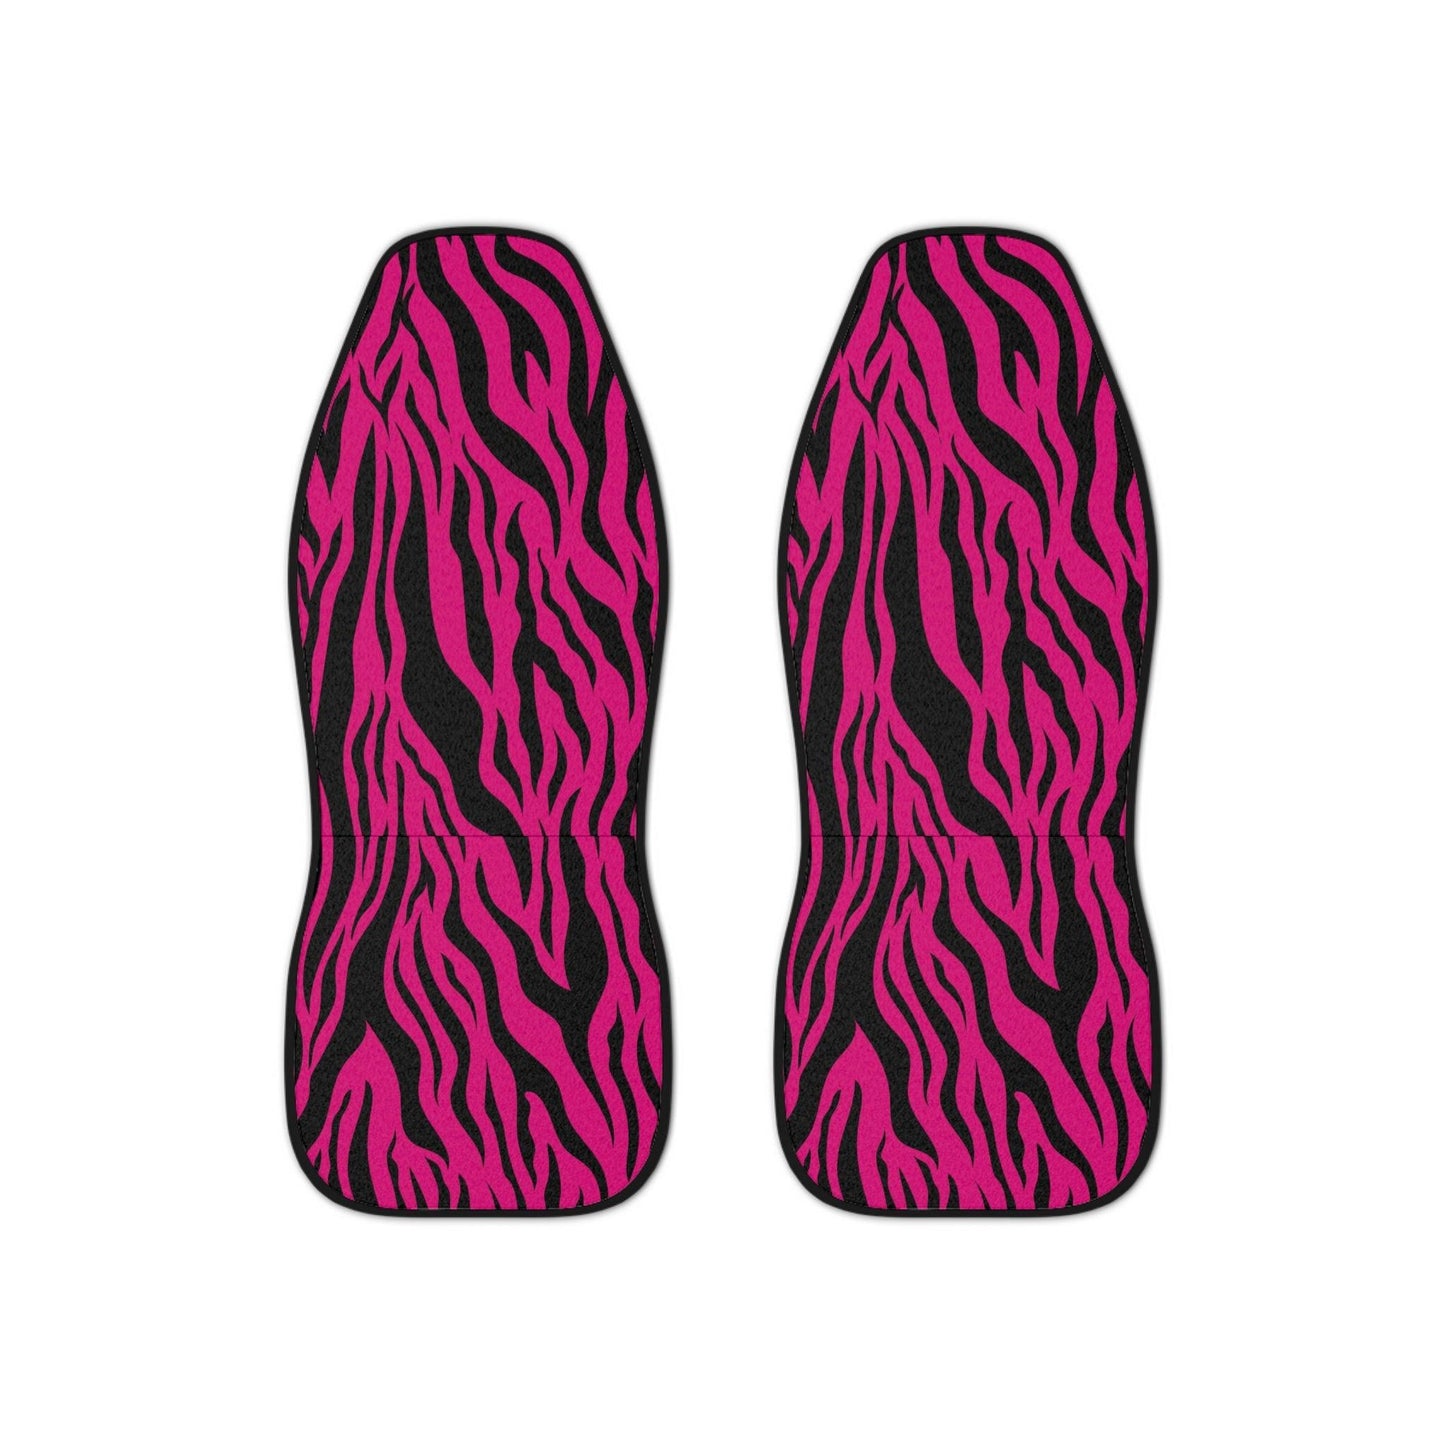 Pink Tiger Stripes Animal Print Car Seat Covers | lovevisionkarma.com